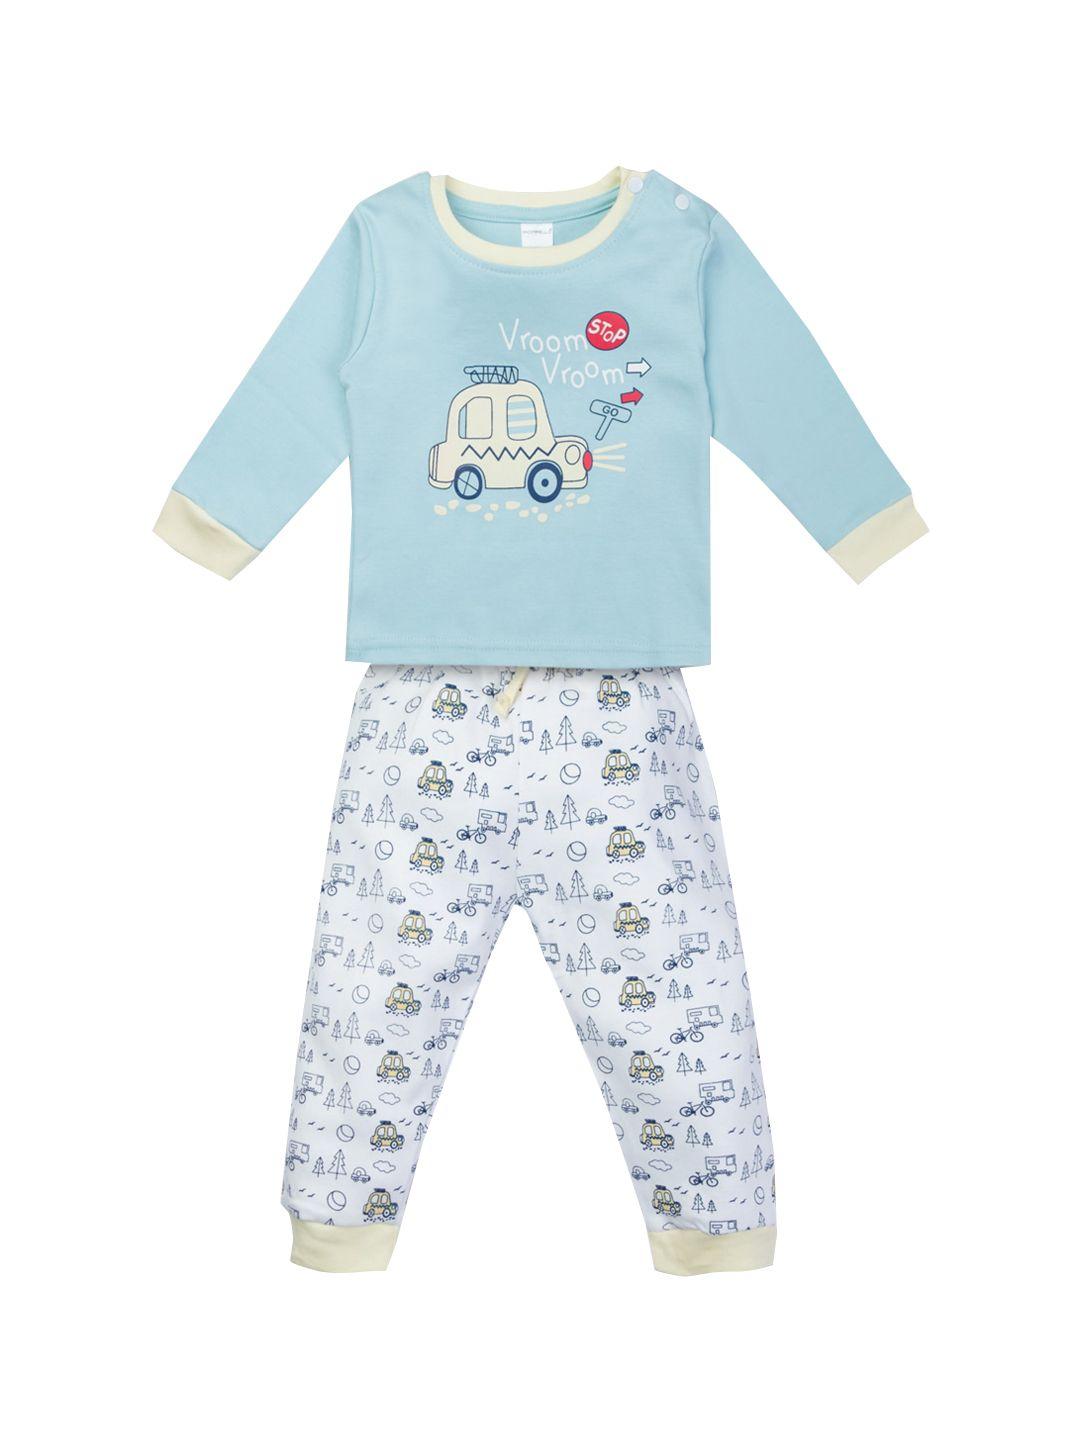 montello infants blue & white printed pure cotton night suit